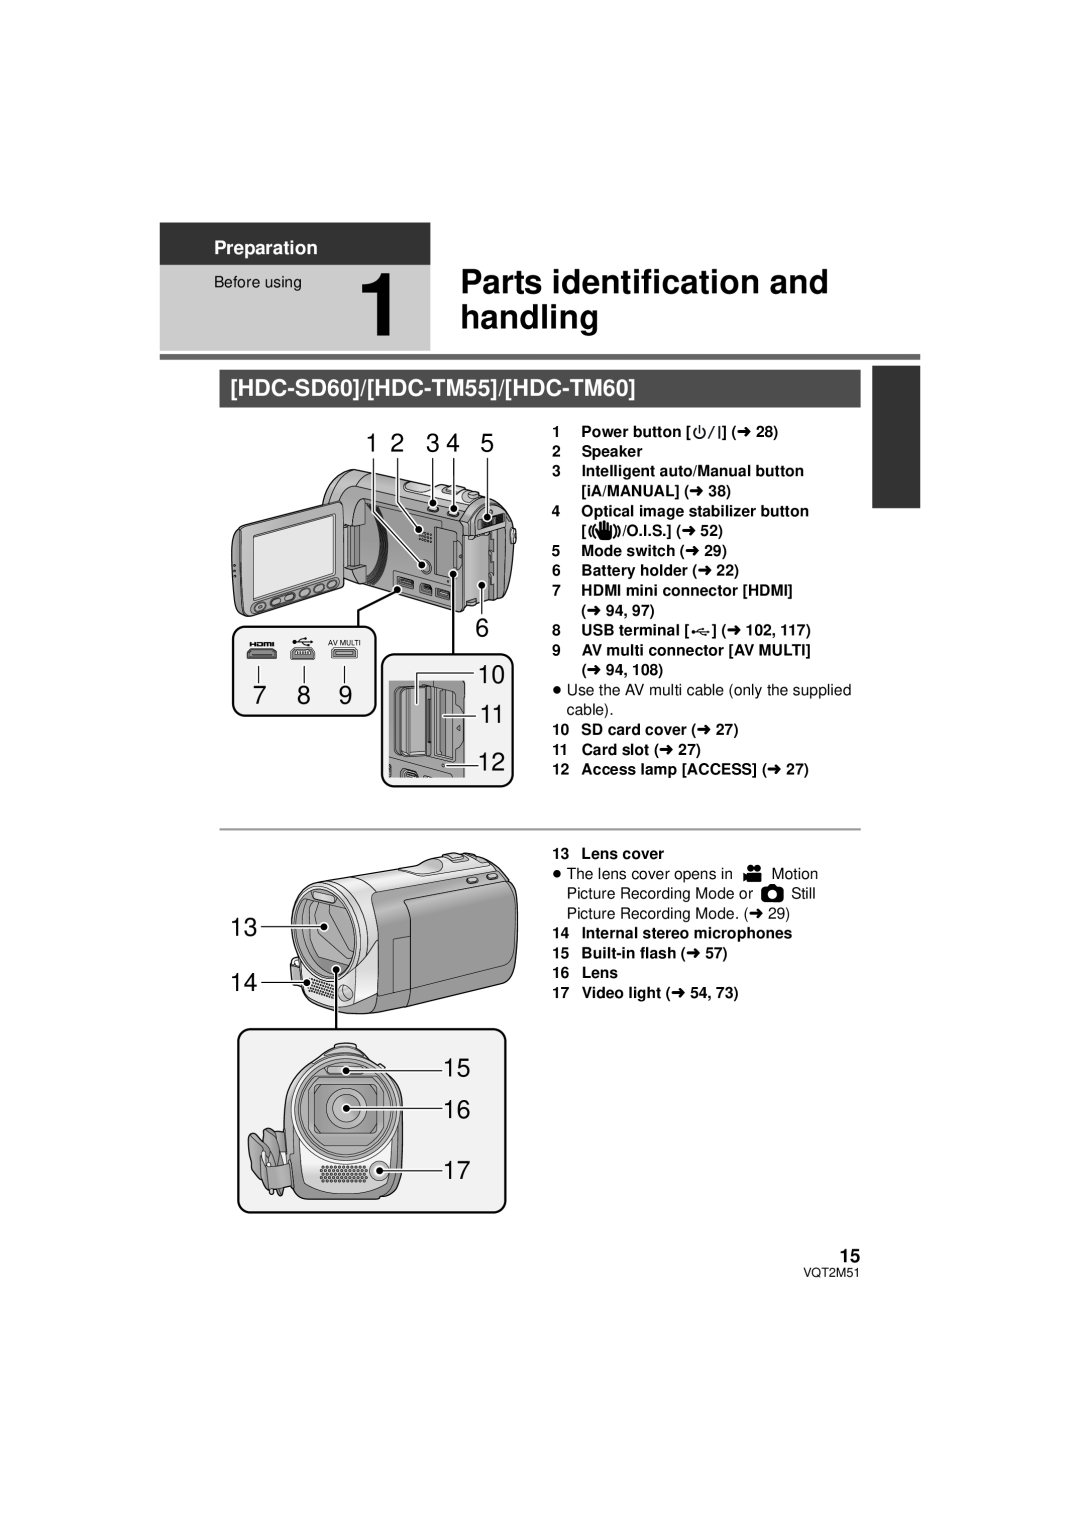 Panasonic HDC-HS60P/PC Parts identification and, handling, 1 2 3 4, HDC-SD60/HDC-TM55/HDC-TM60, Preparation, Lens cover 